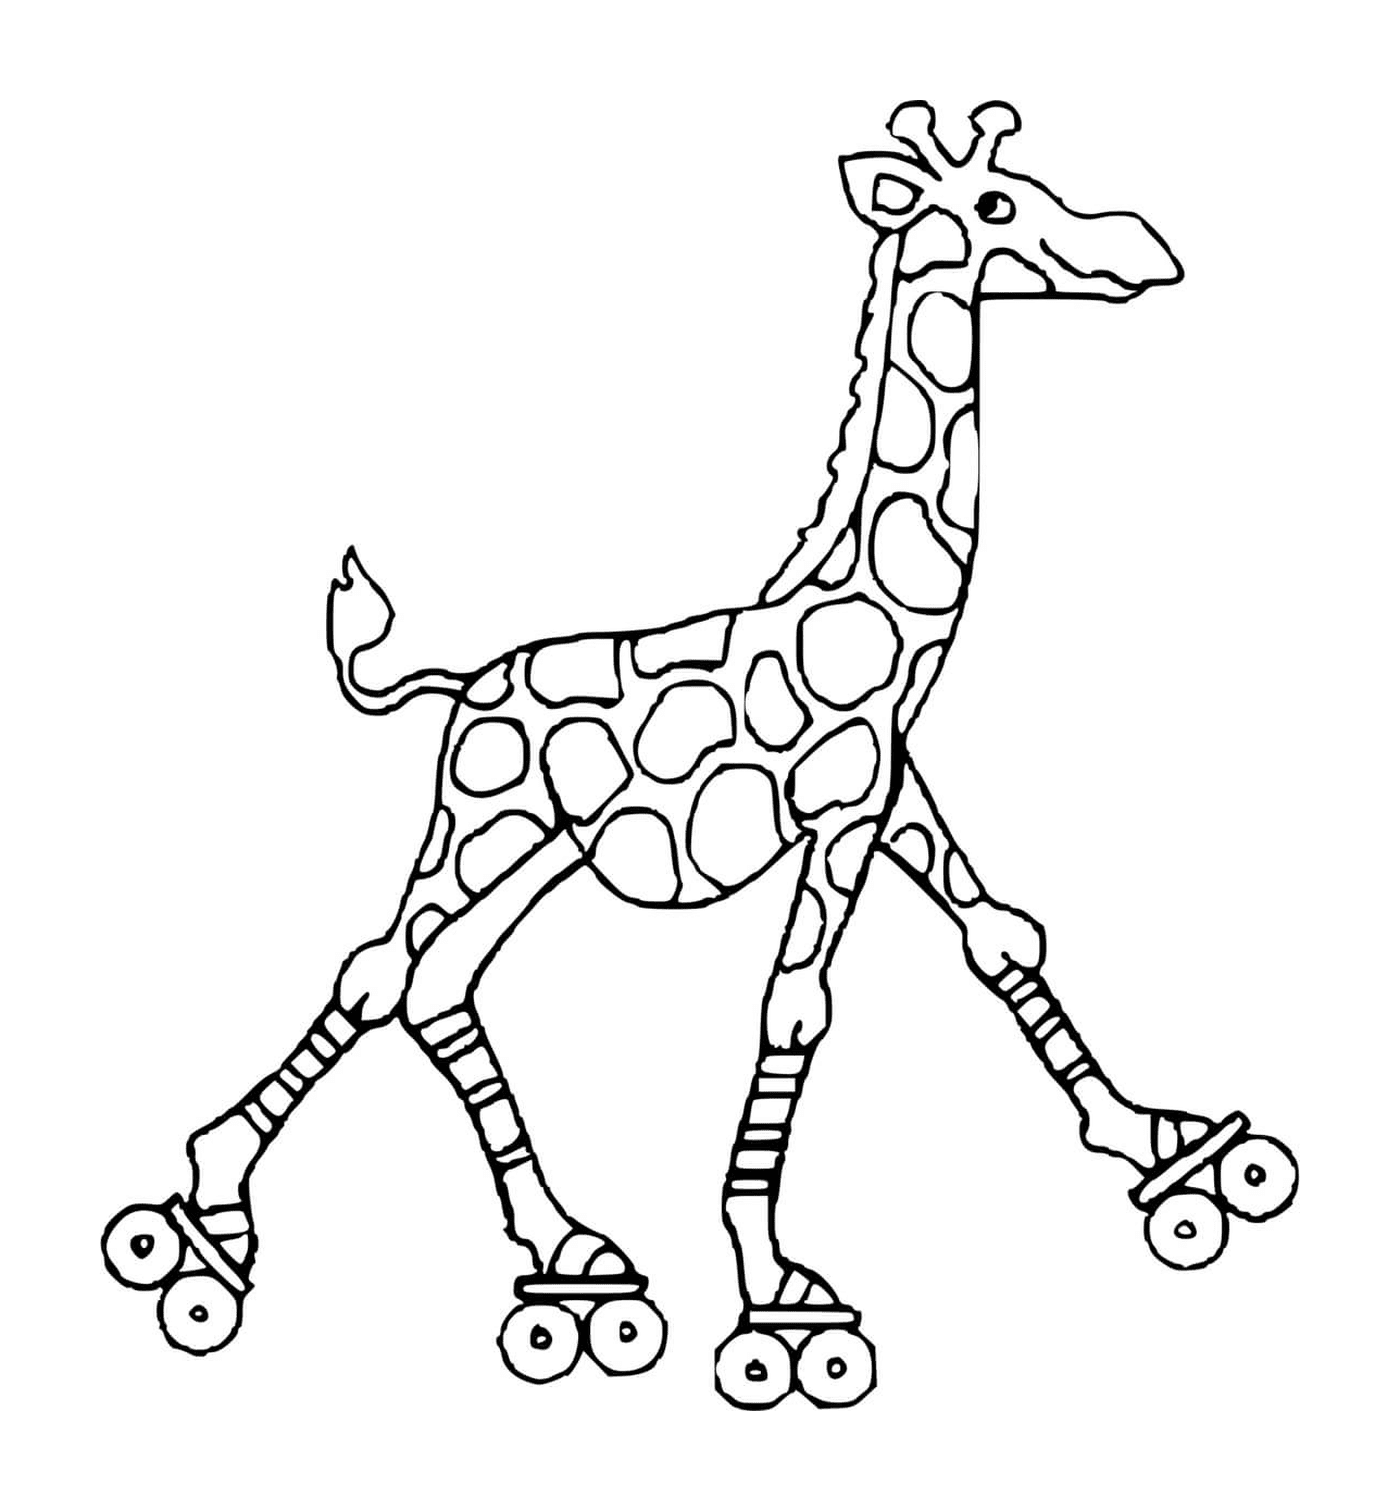  Girafe con patines 